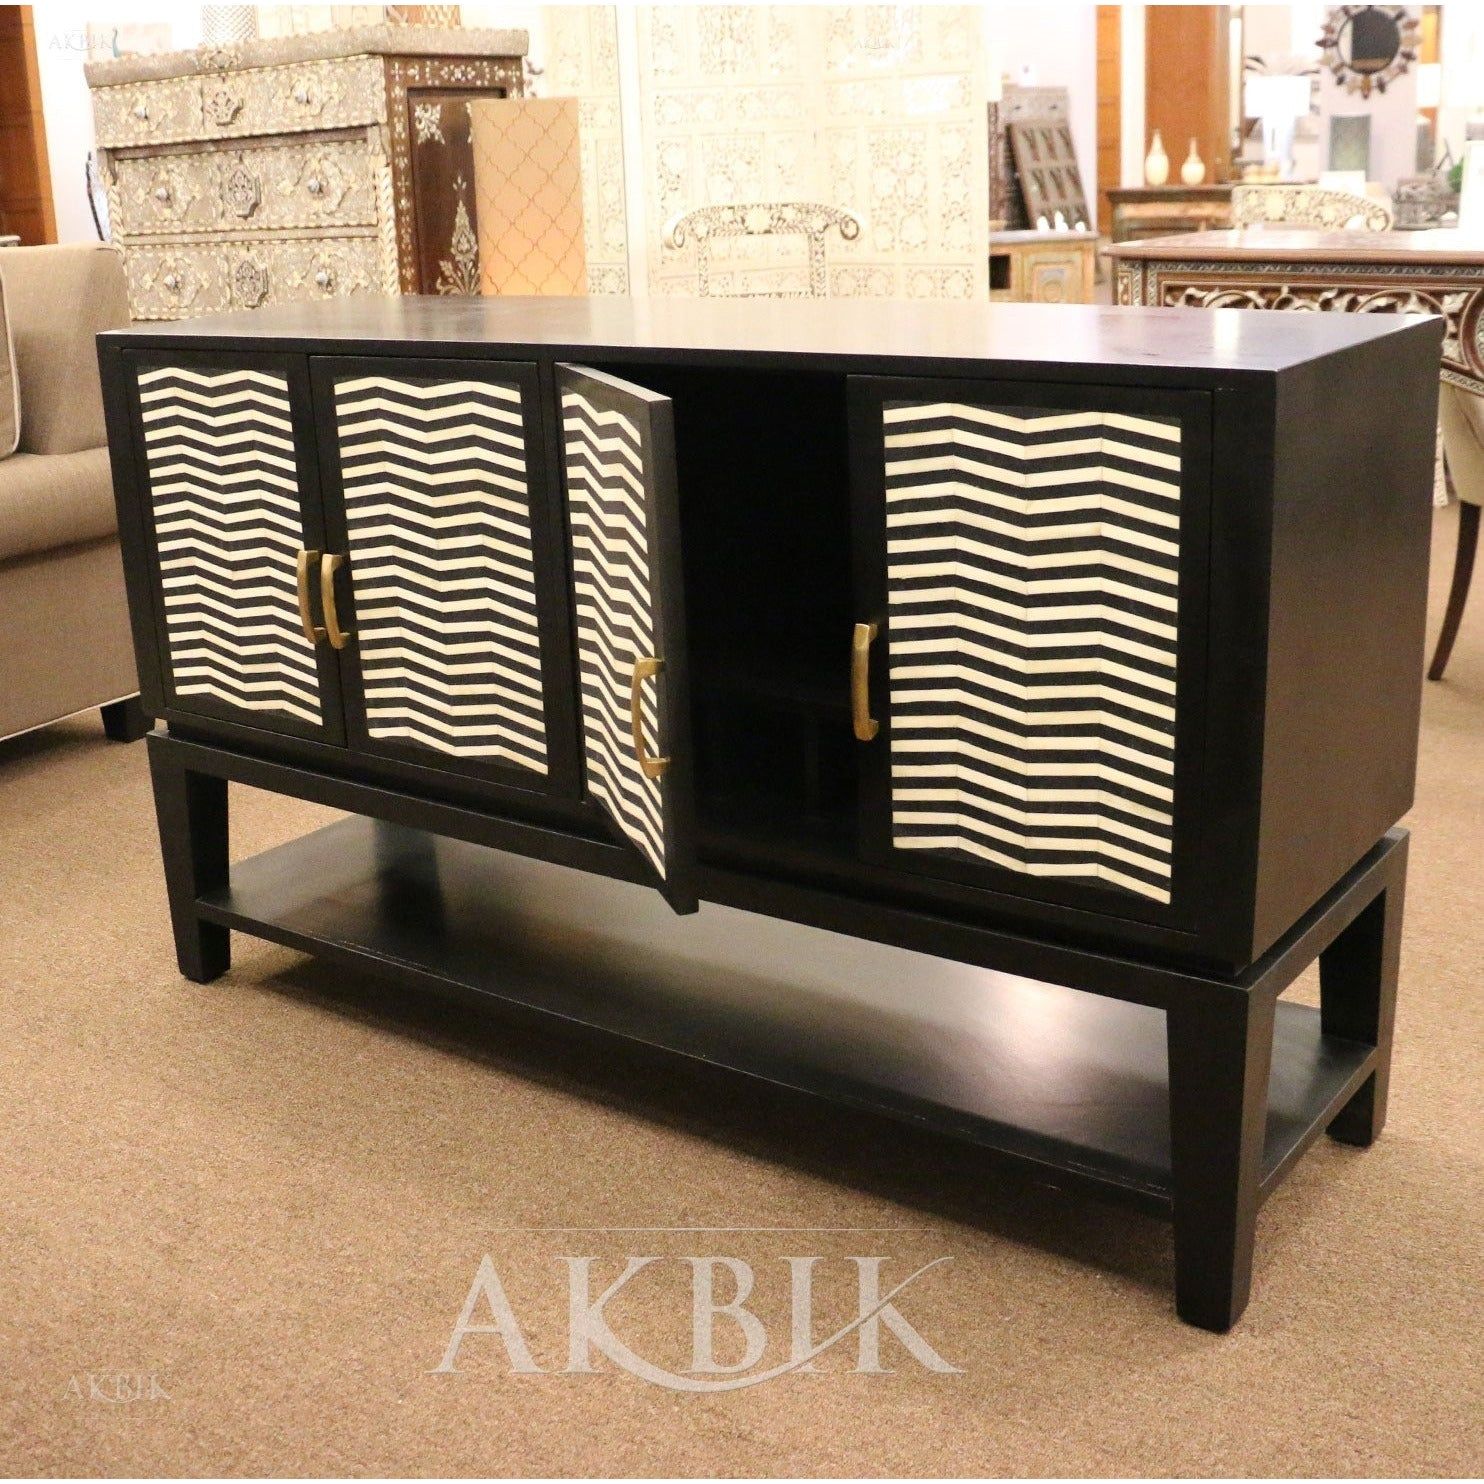 CHEVRON DESIGN SIDEBOARD - AKBIK Furniture & Design